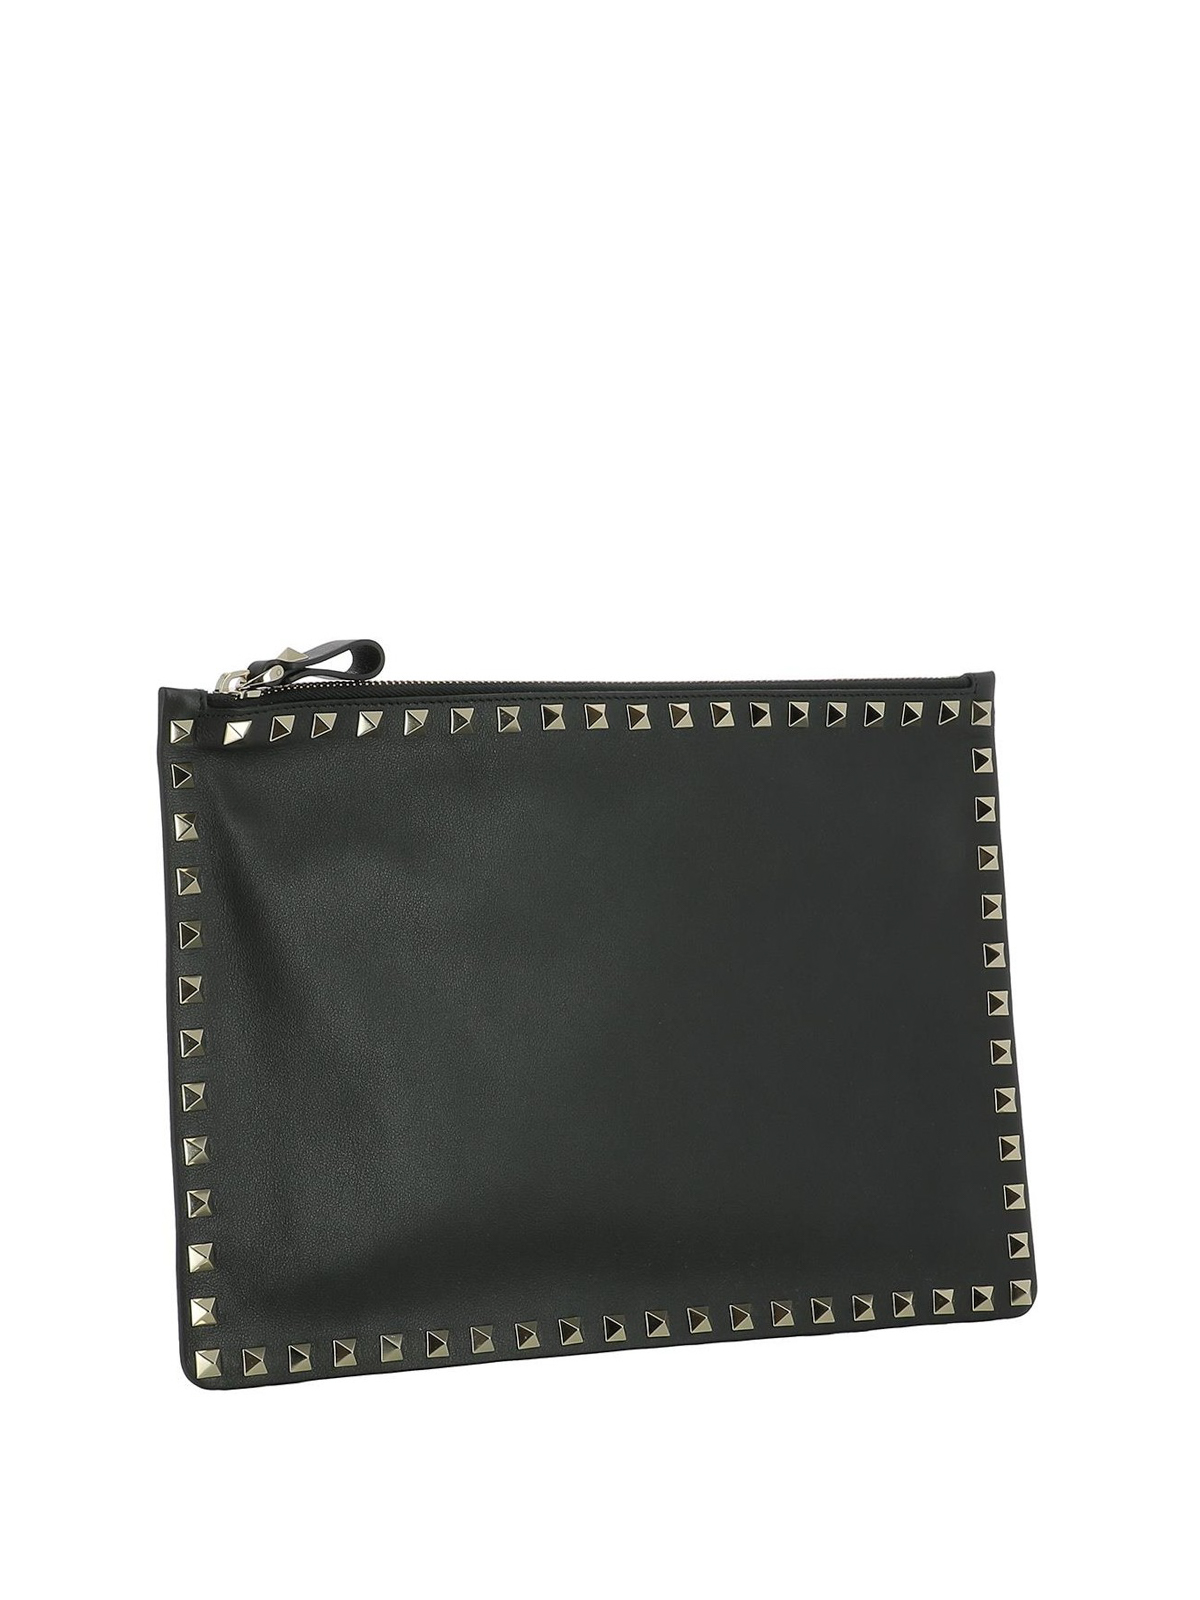 Rockstud Leather Clutch in Black - Valentino Garavani